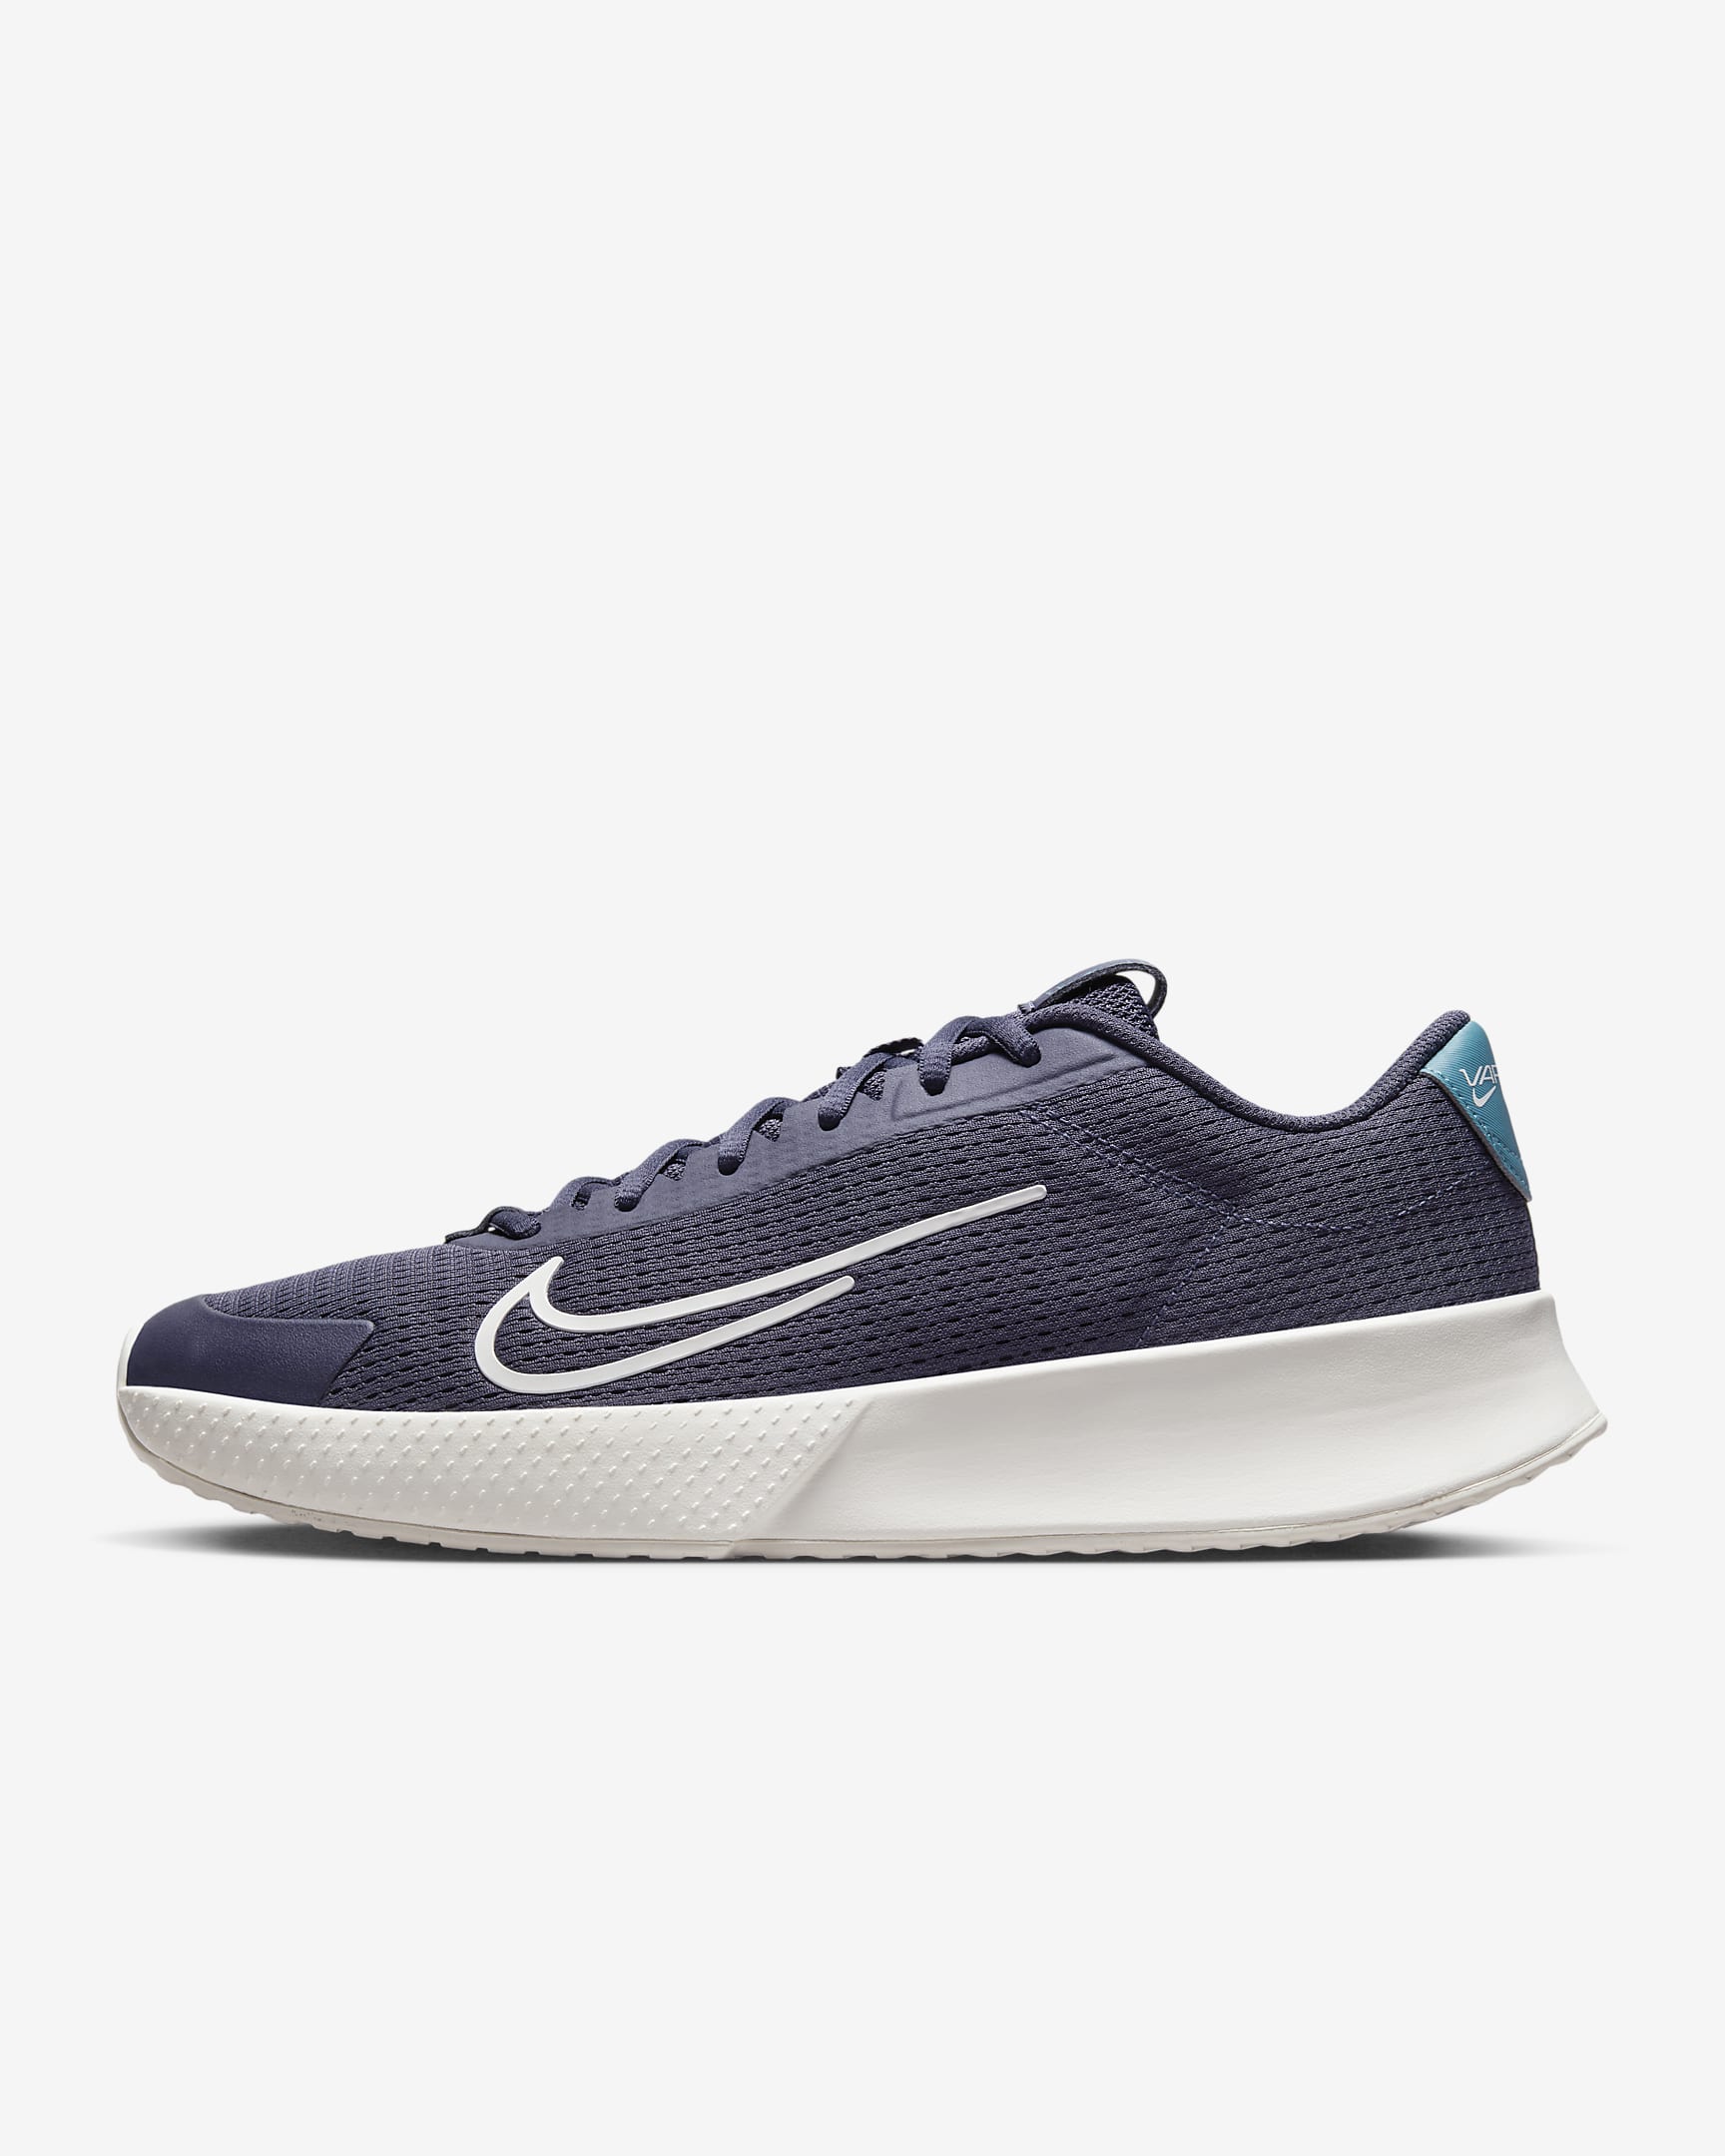 Nike Men's NikeCourt Vapor Lite 2 Hard Court Tennis Shoes (Gridiron/Mineral Teal/Sail)